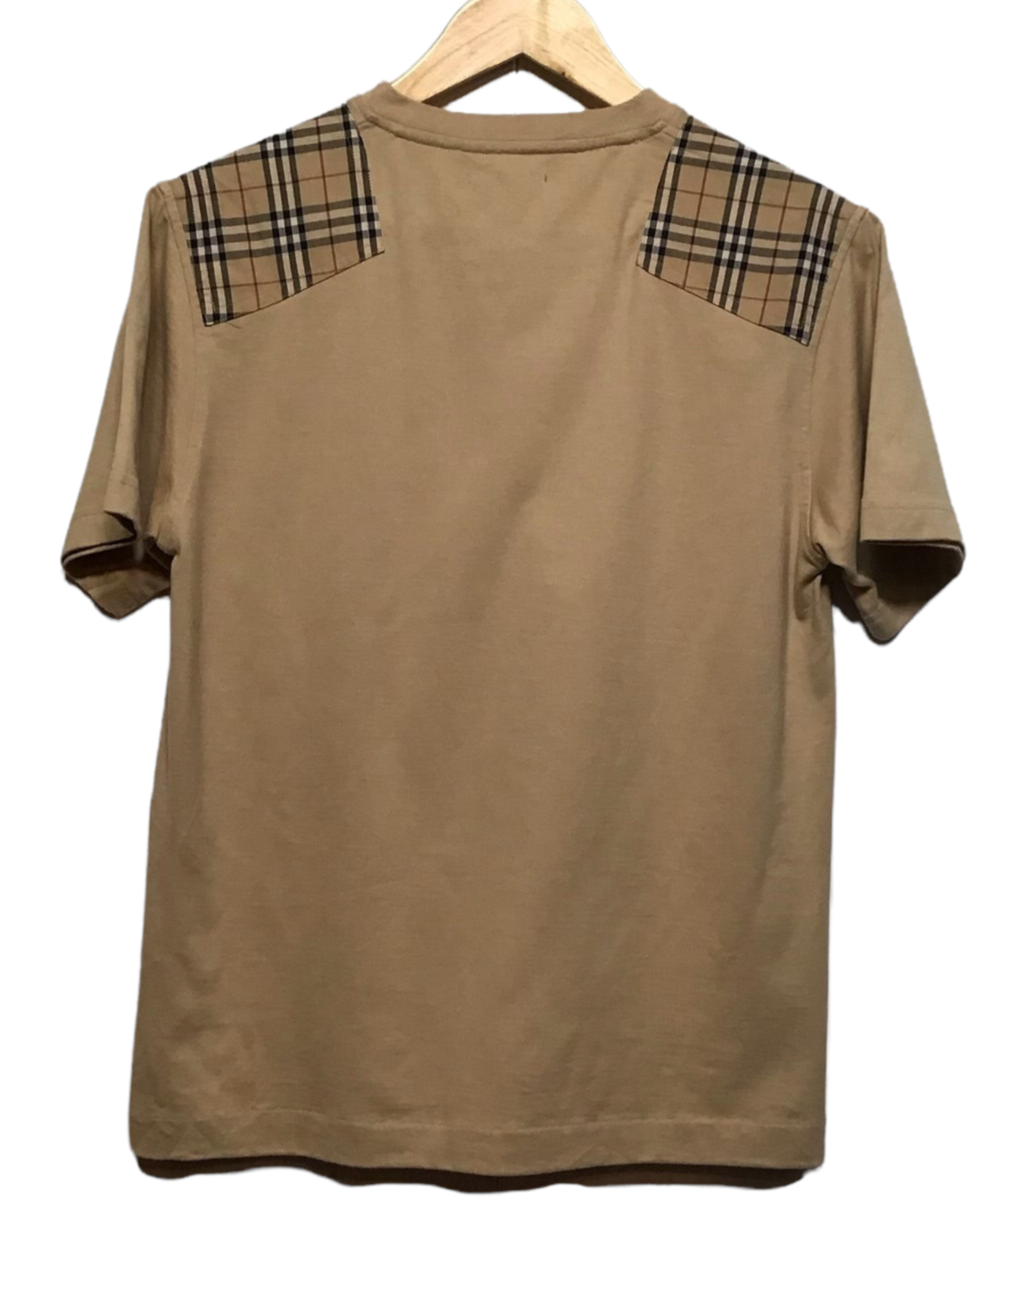 Burberry Nova Check T-Shirt (Size S)